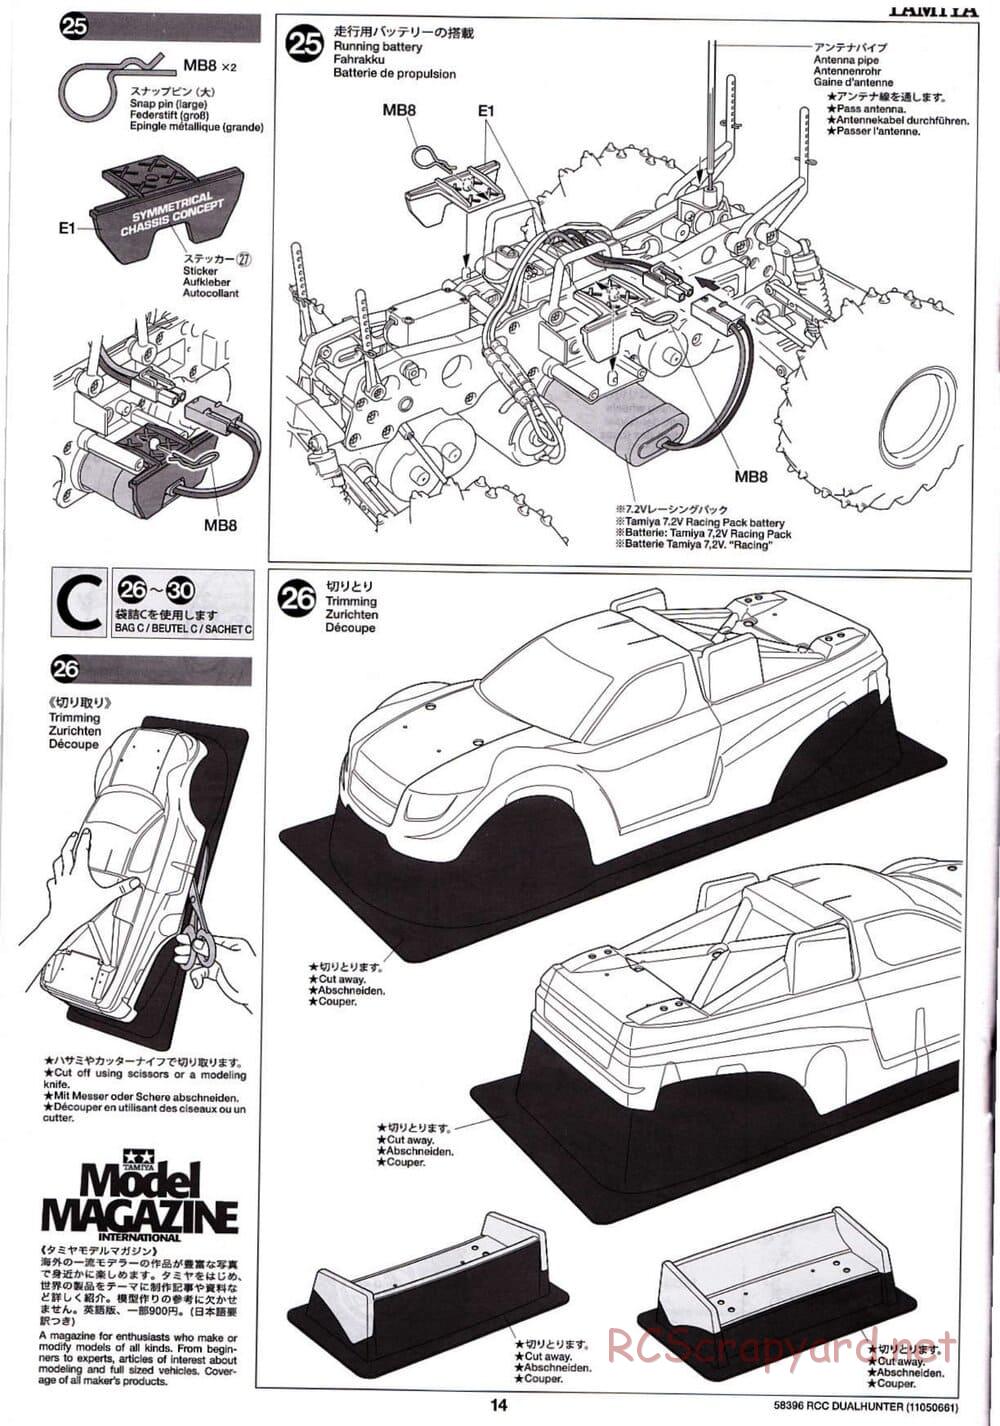 Tamiya - Dualhunter - WR-01 Chassis - Manual - Page 14